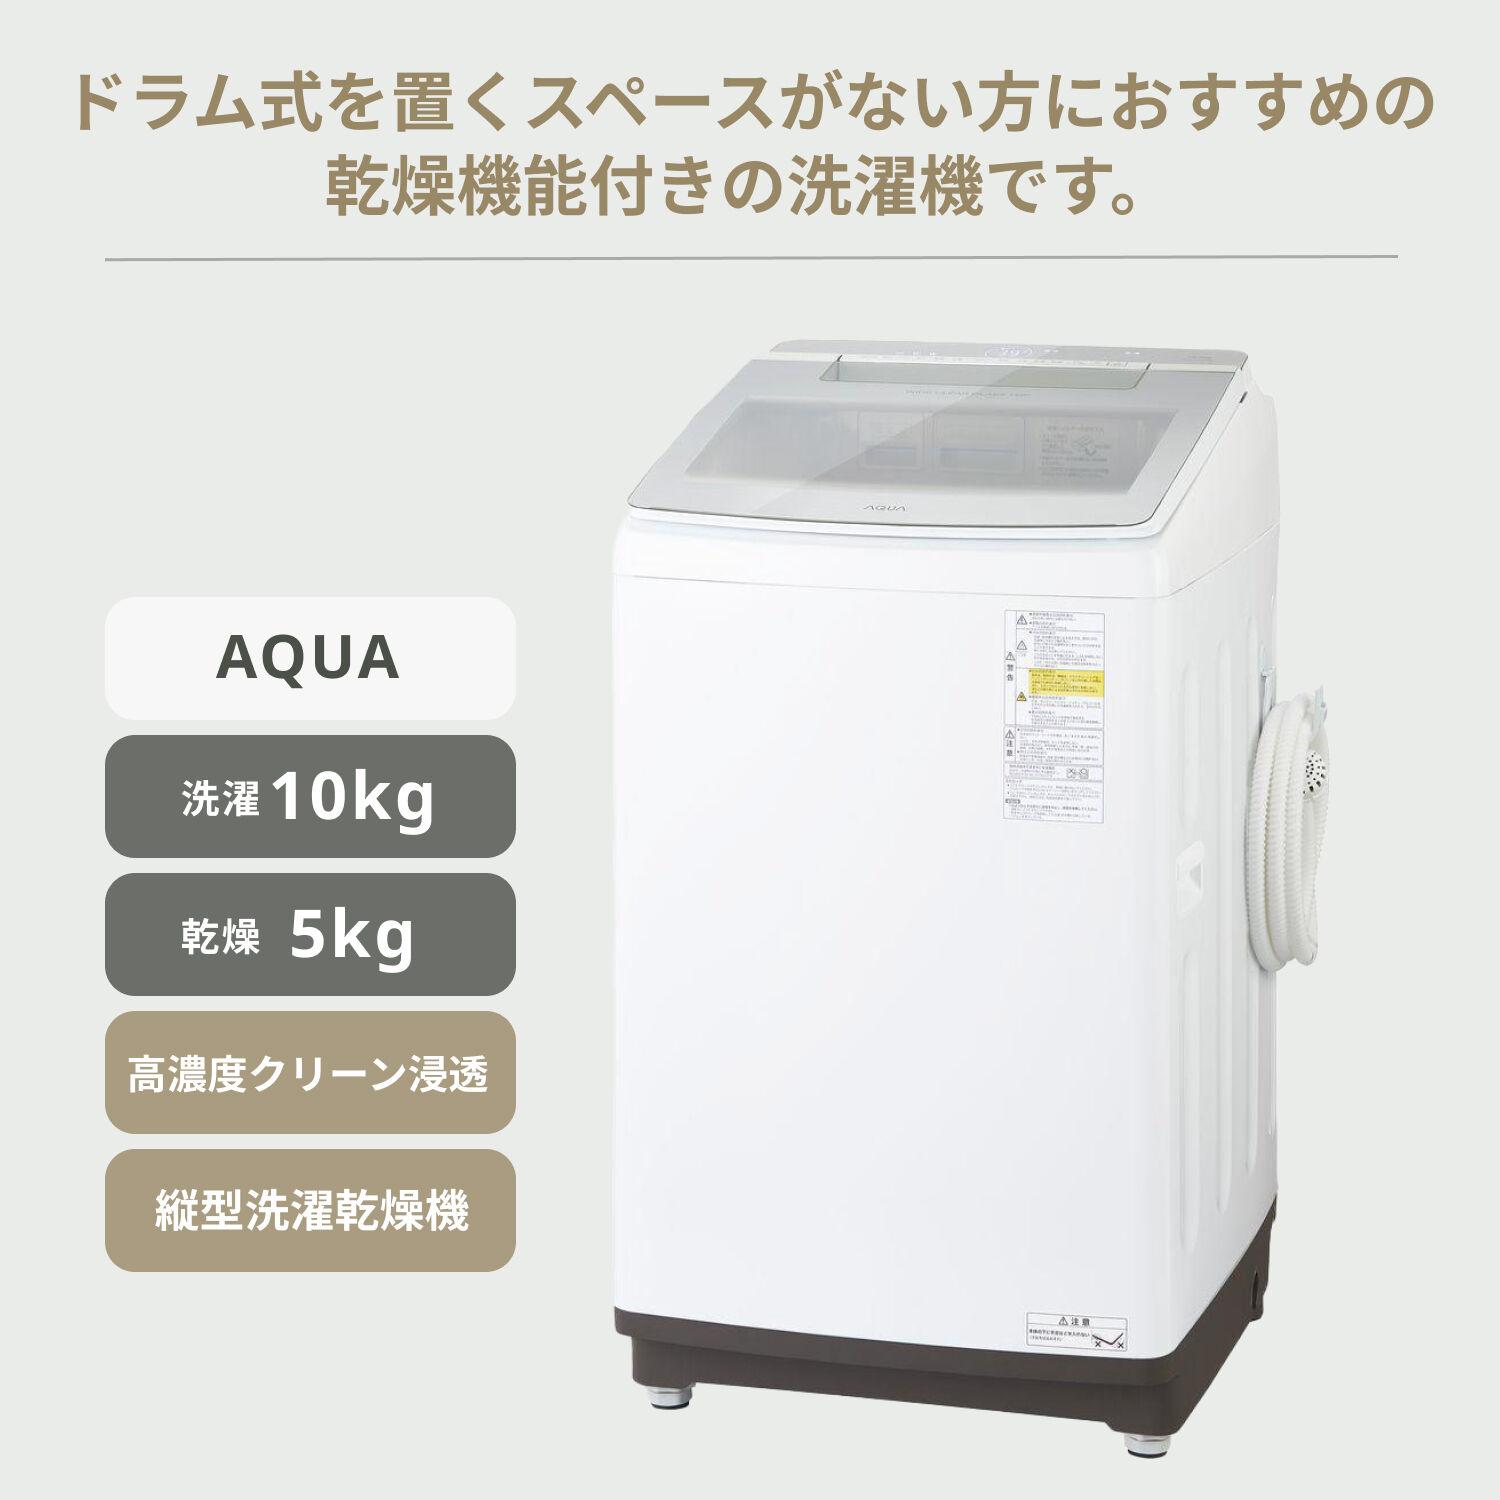 AQUA（アクア) 10kg/5kg 縦型洗濯乾燥機のご紹介 - 生活家電